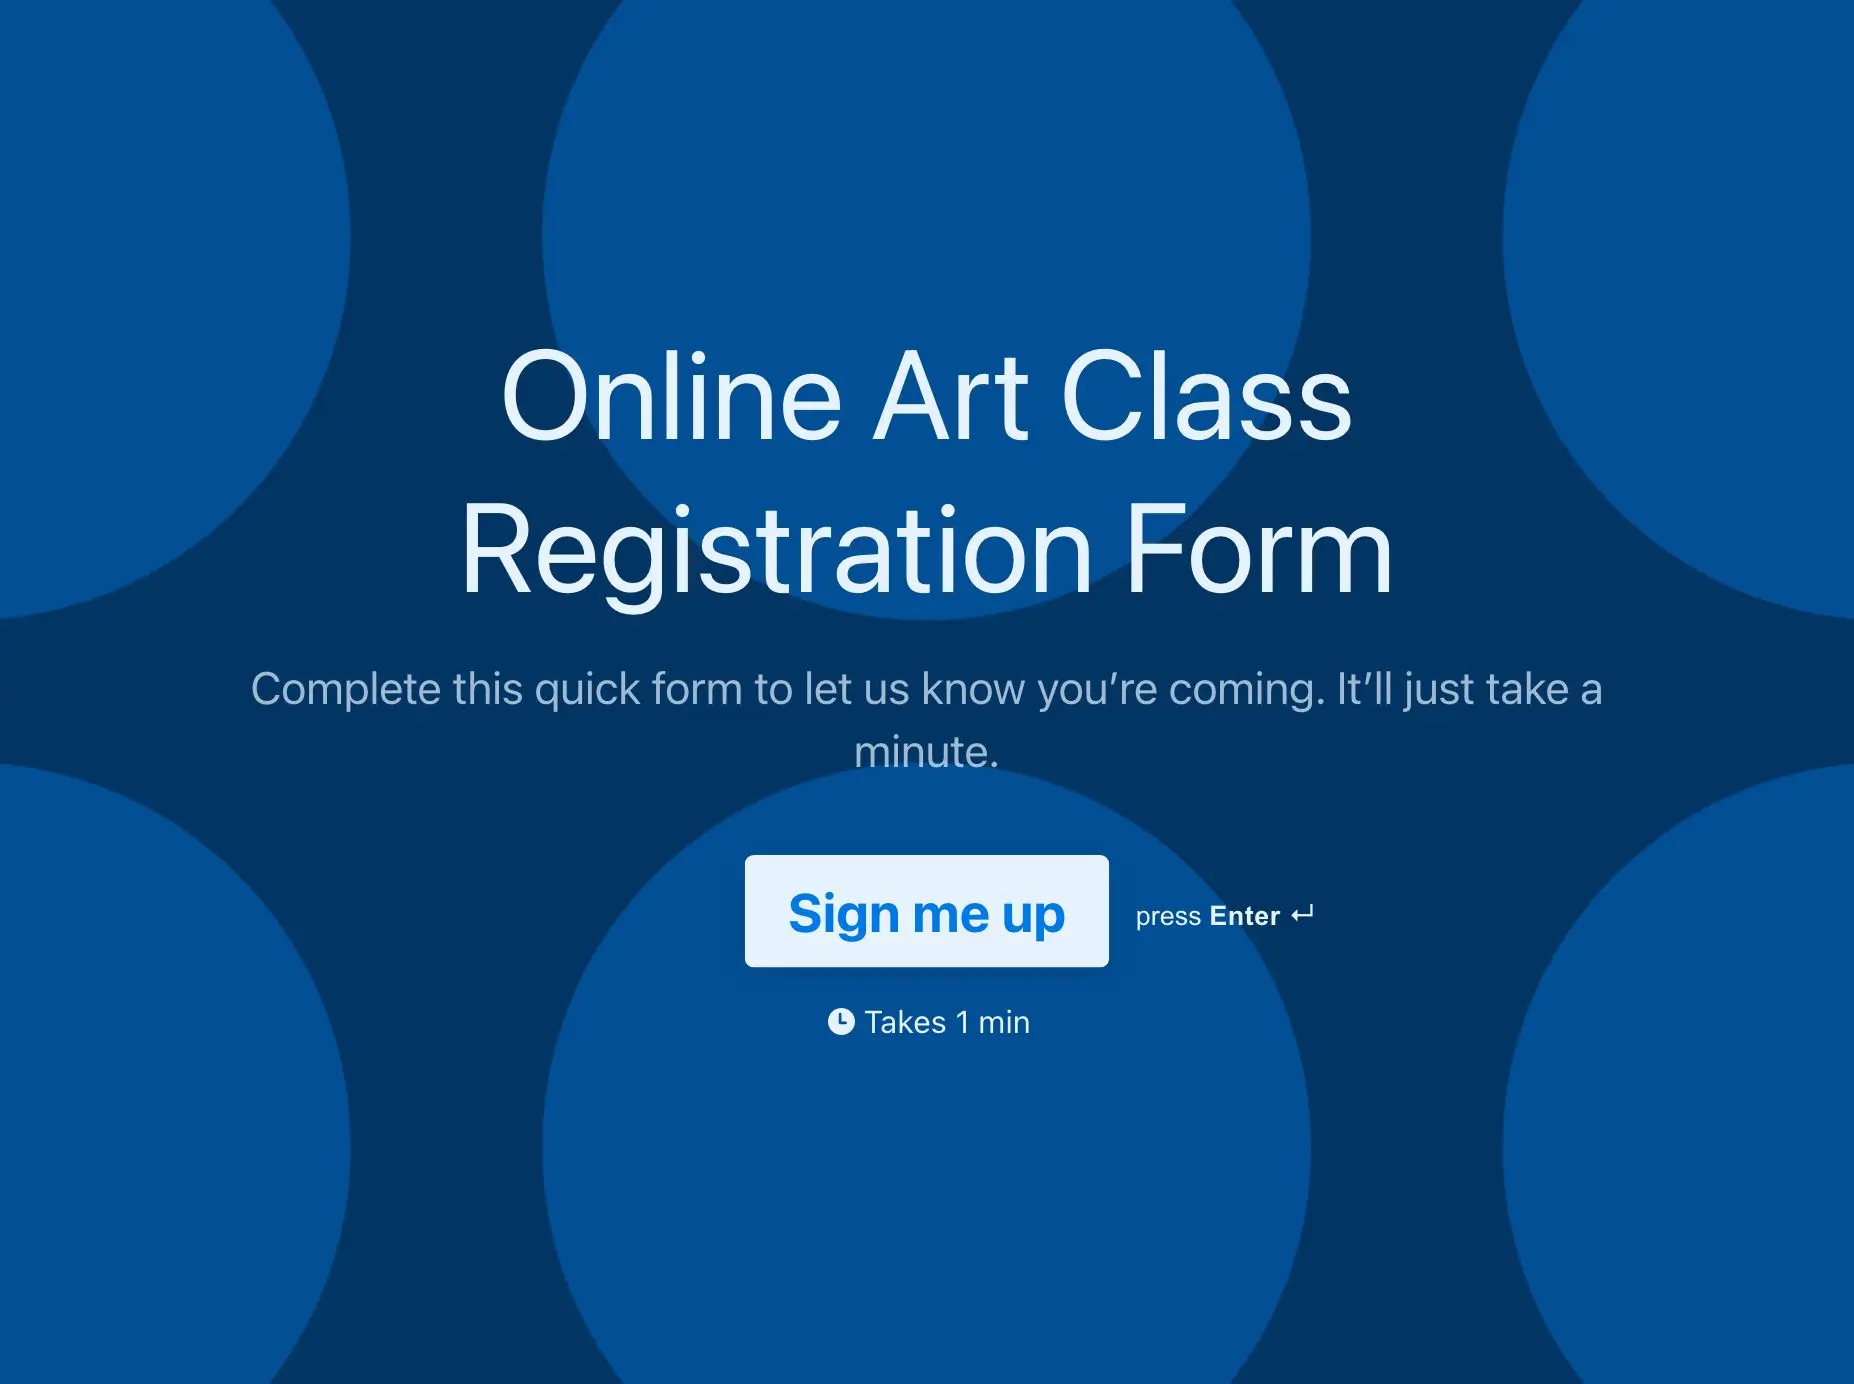 Online Art Class Registration Form Template Hero